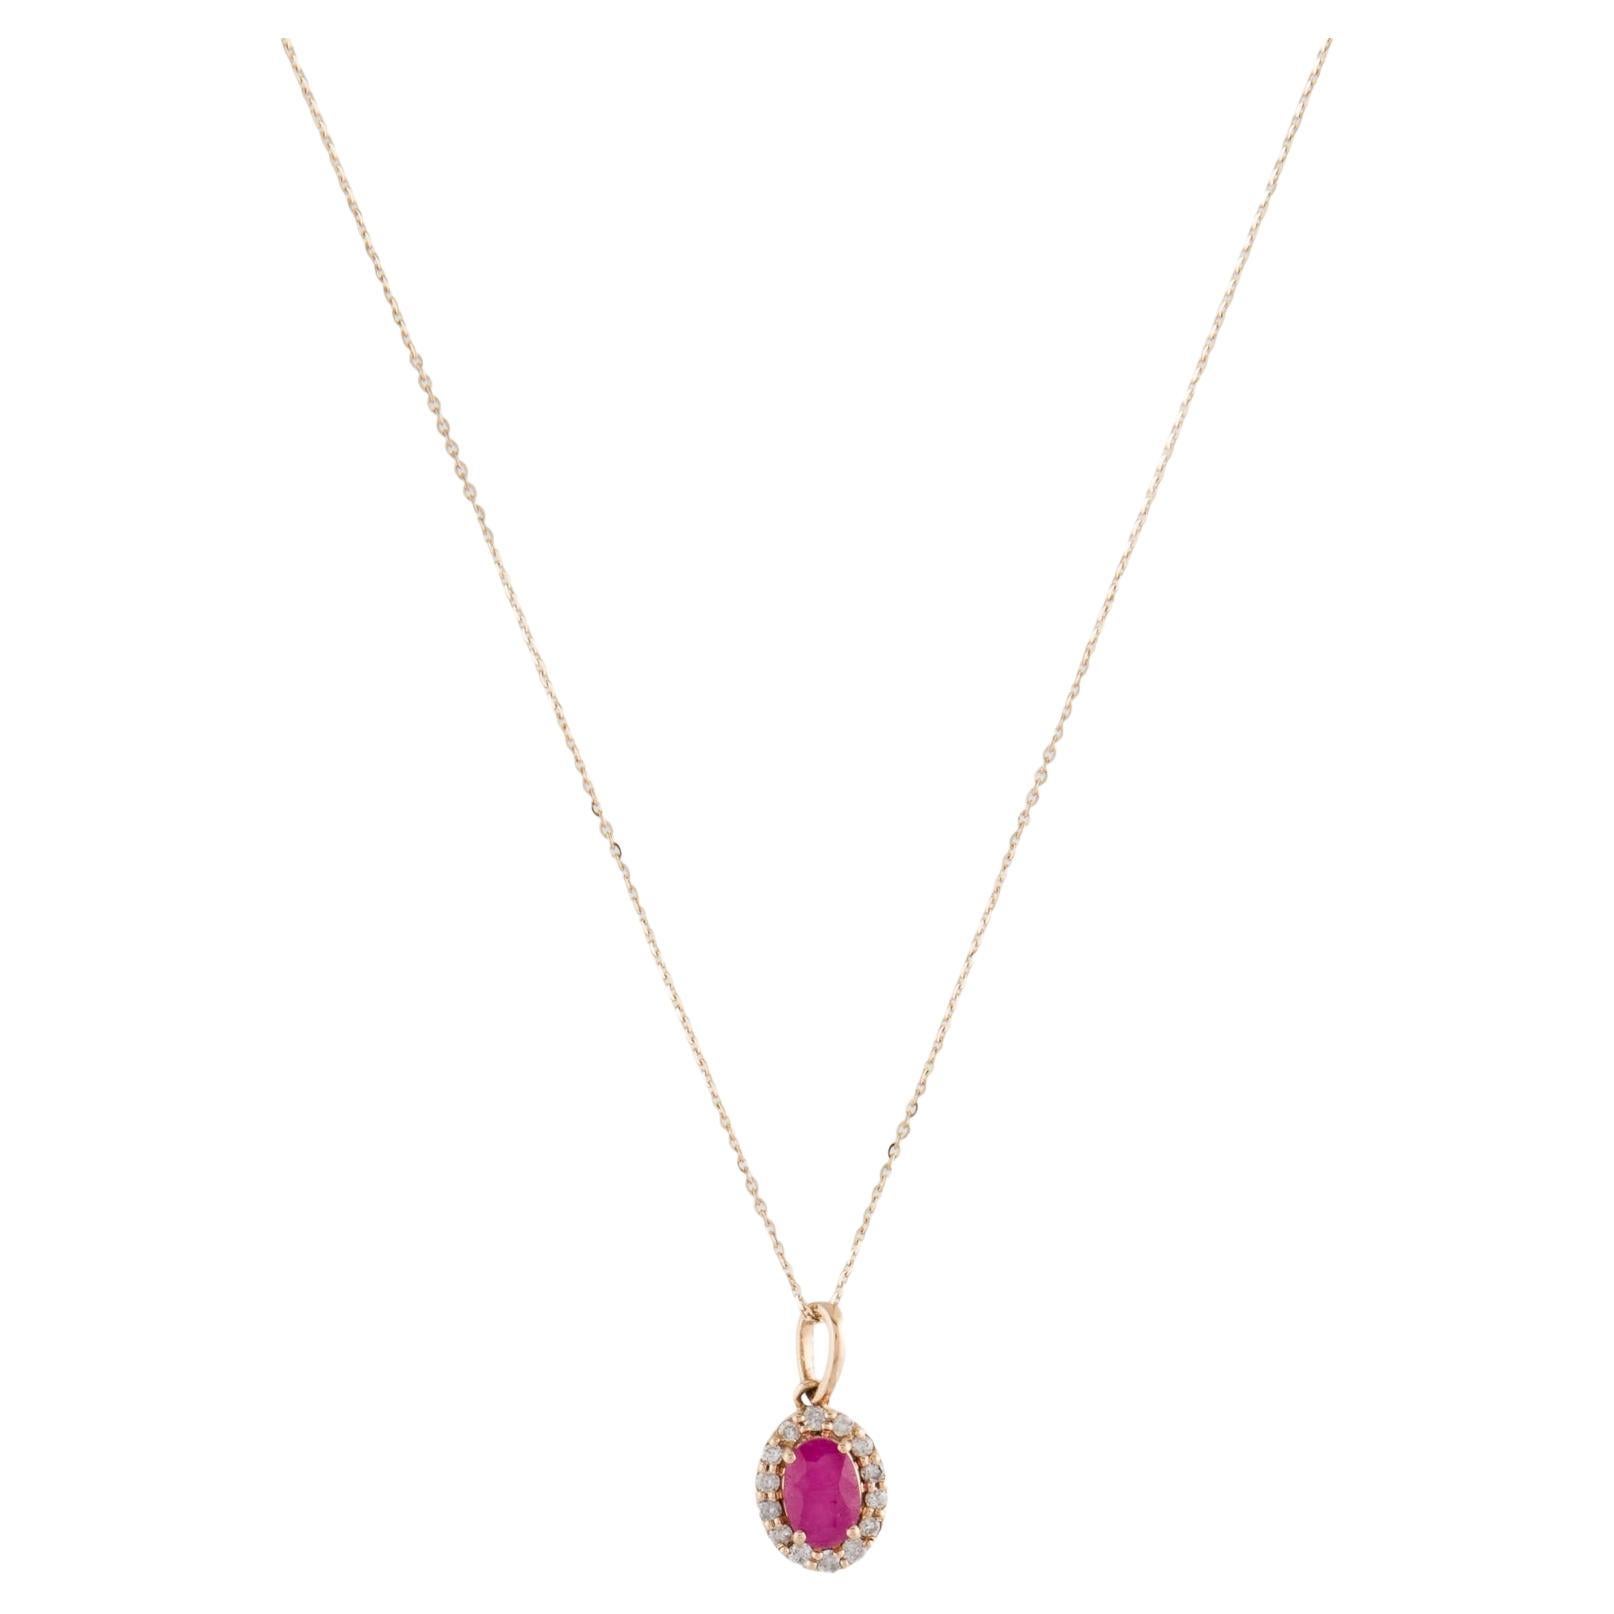 14K Ruby & Diamond Pendant Necklace - Stunning Gemstone Statement Piece For Sale